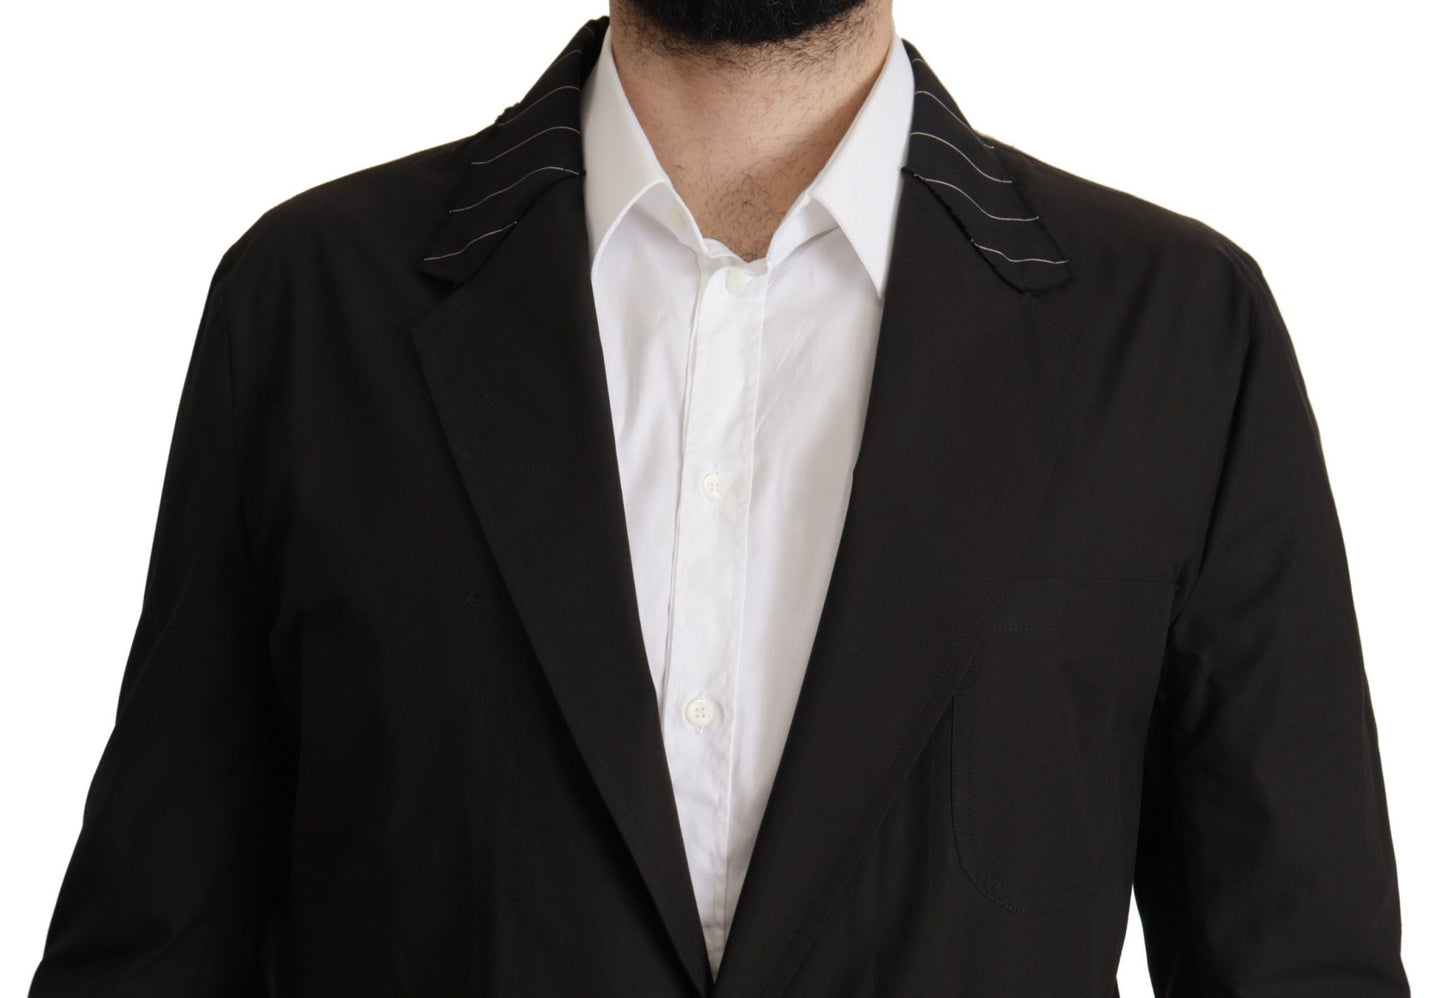 Dolce & Gabbana Elegant Black Cotton-Wool Blend Blazer Jacket